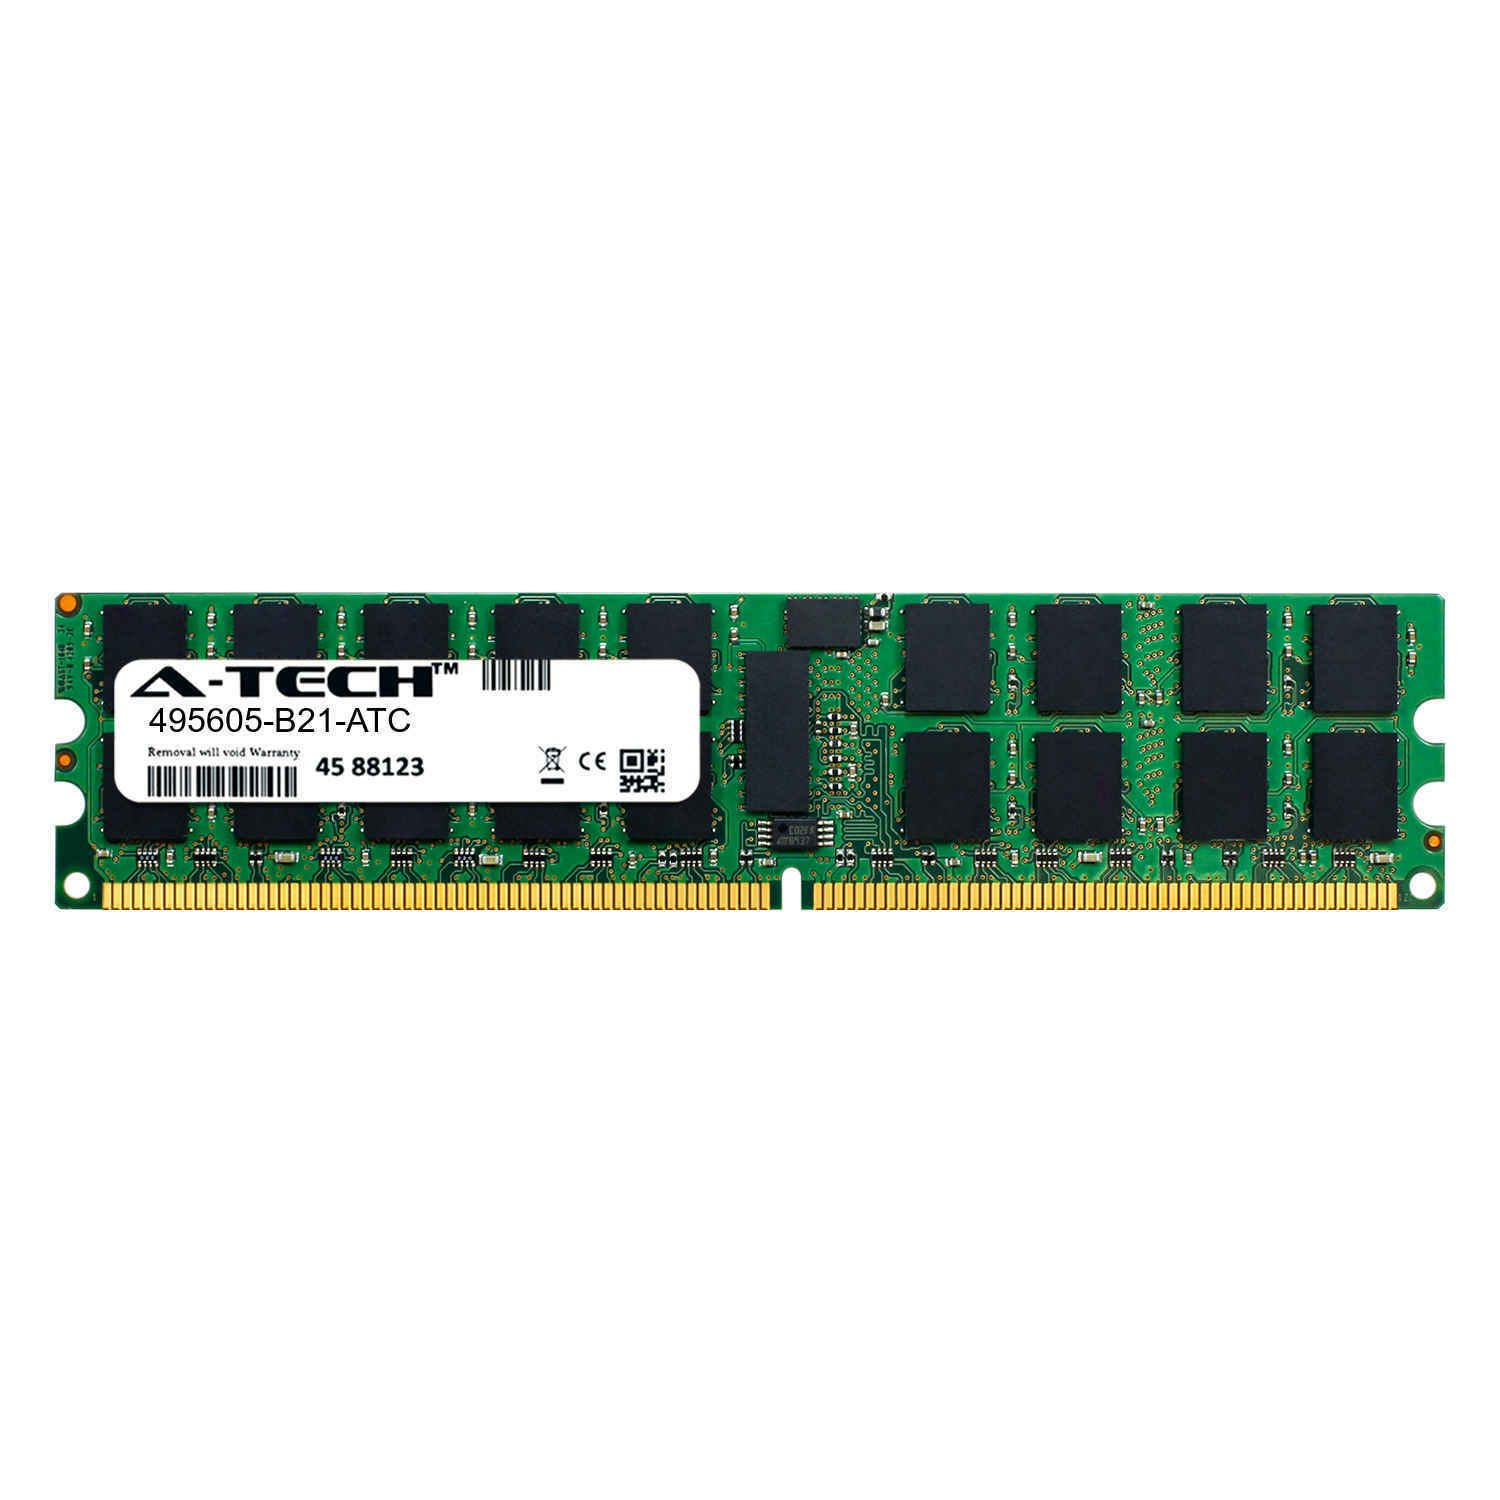 8GB DDR2 PC2-5300R 667MHz RDIMM (HP 495605-B21 Equivalent) Server Memory RAM